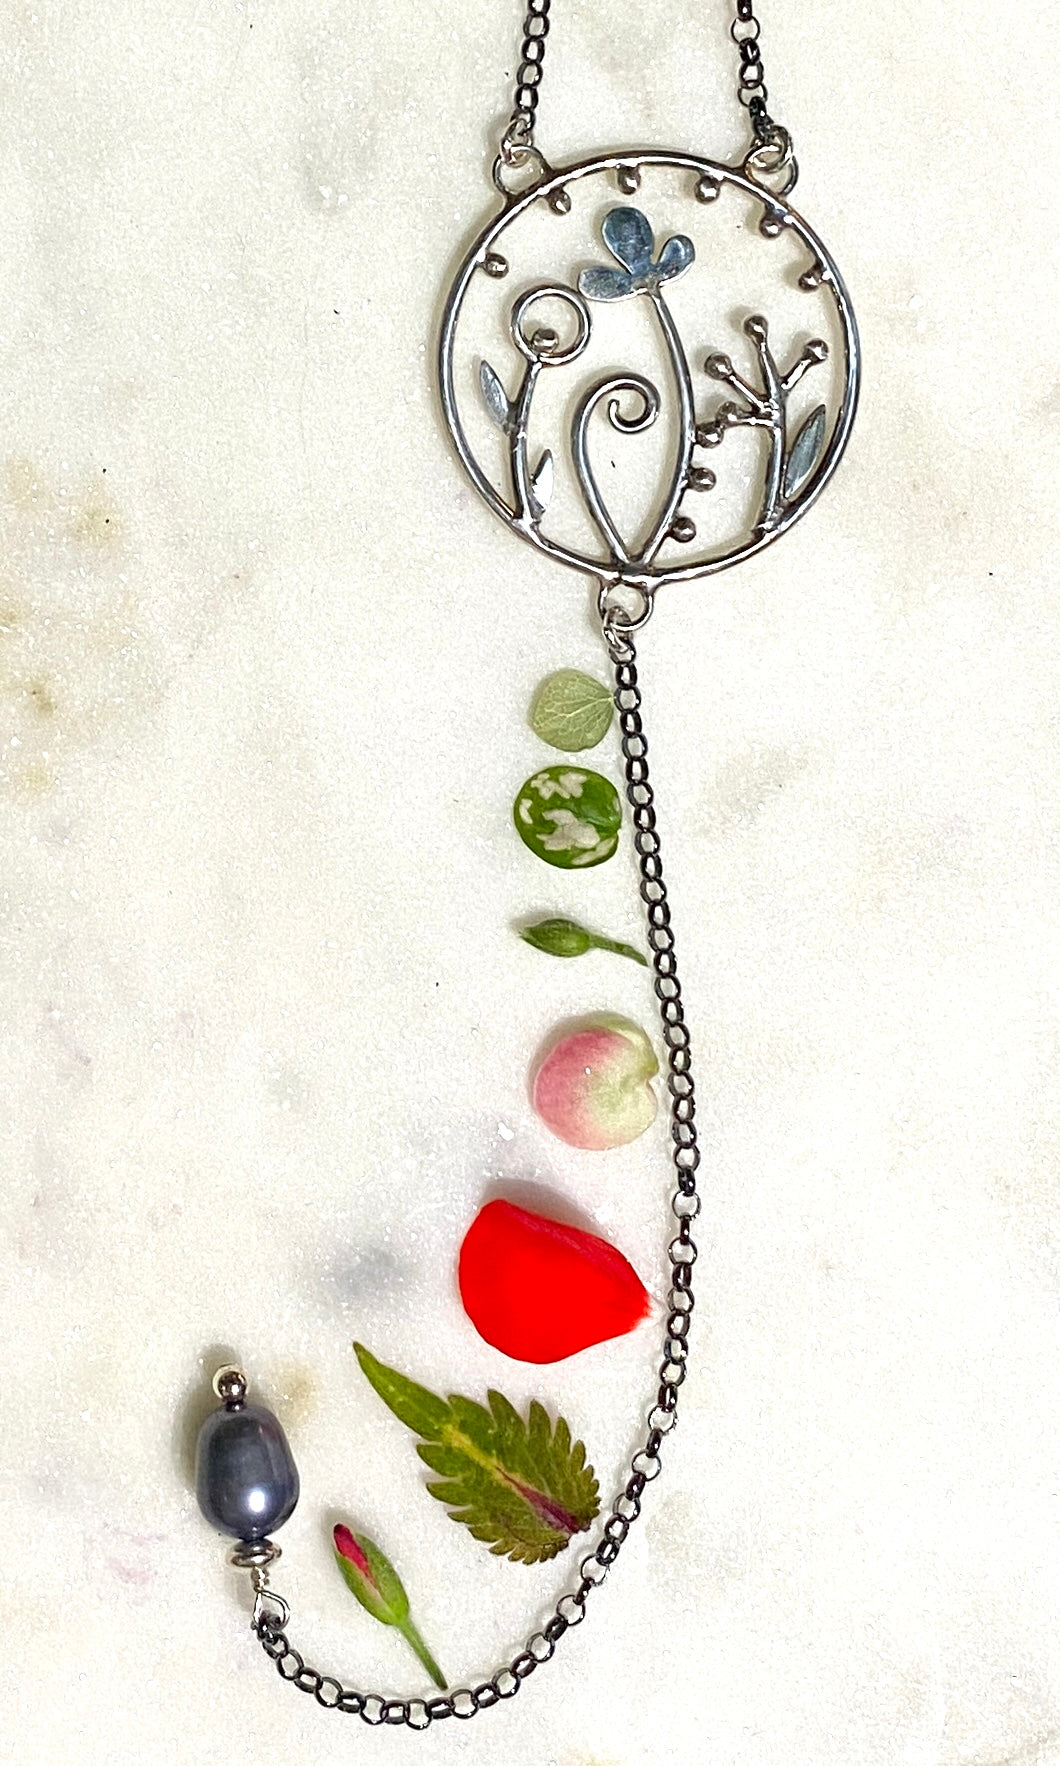 Meaningful Rain Garden Necklace